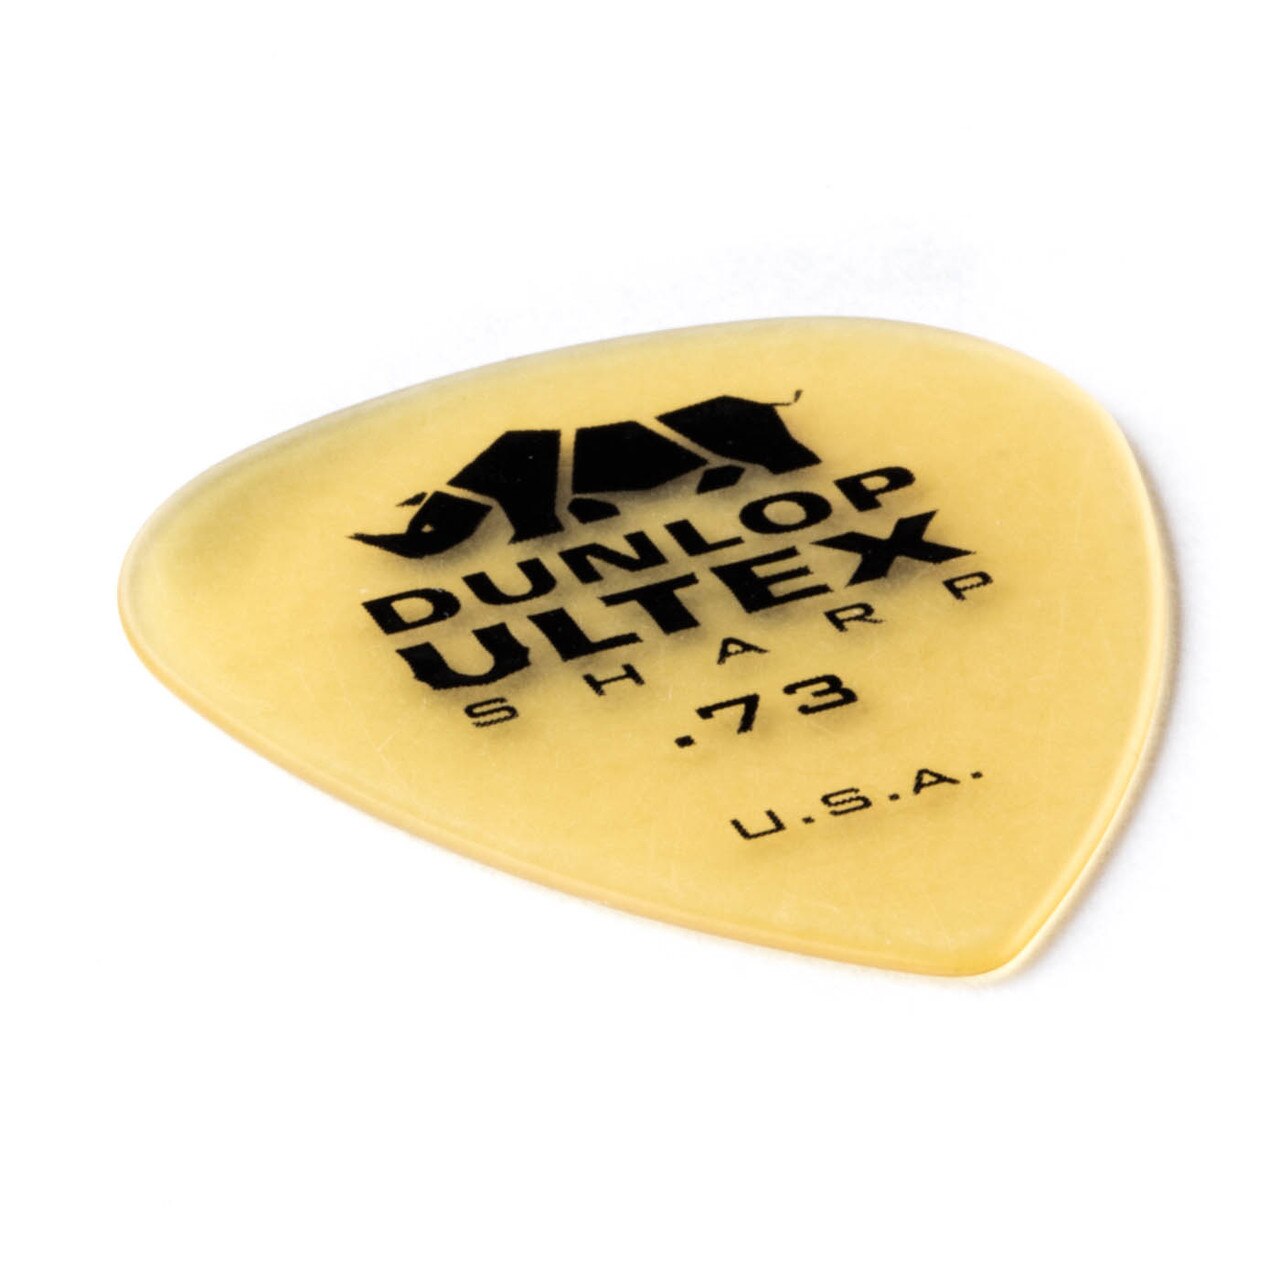 Jim Dunlop Ultex Sharp 433 0.73mm - MÉdiator & Onglet - Variation 1